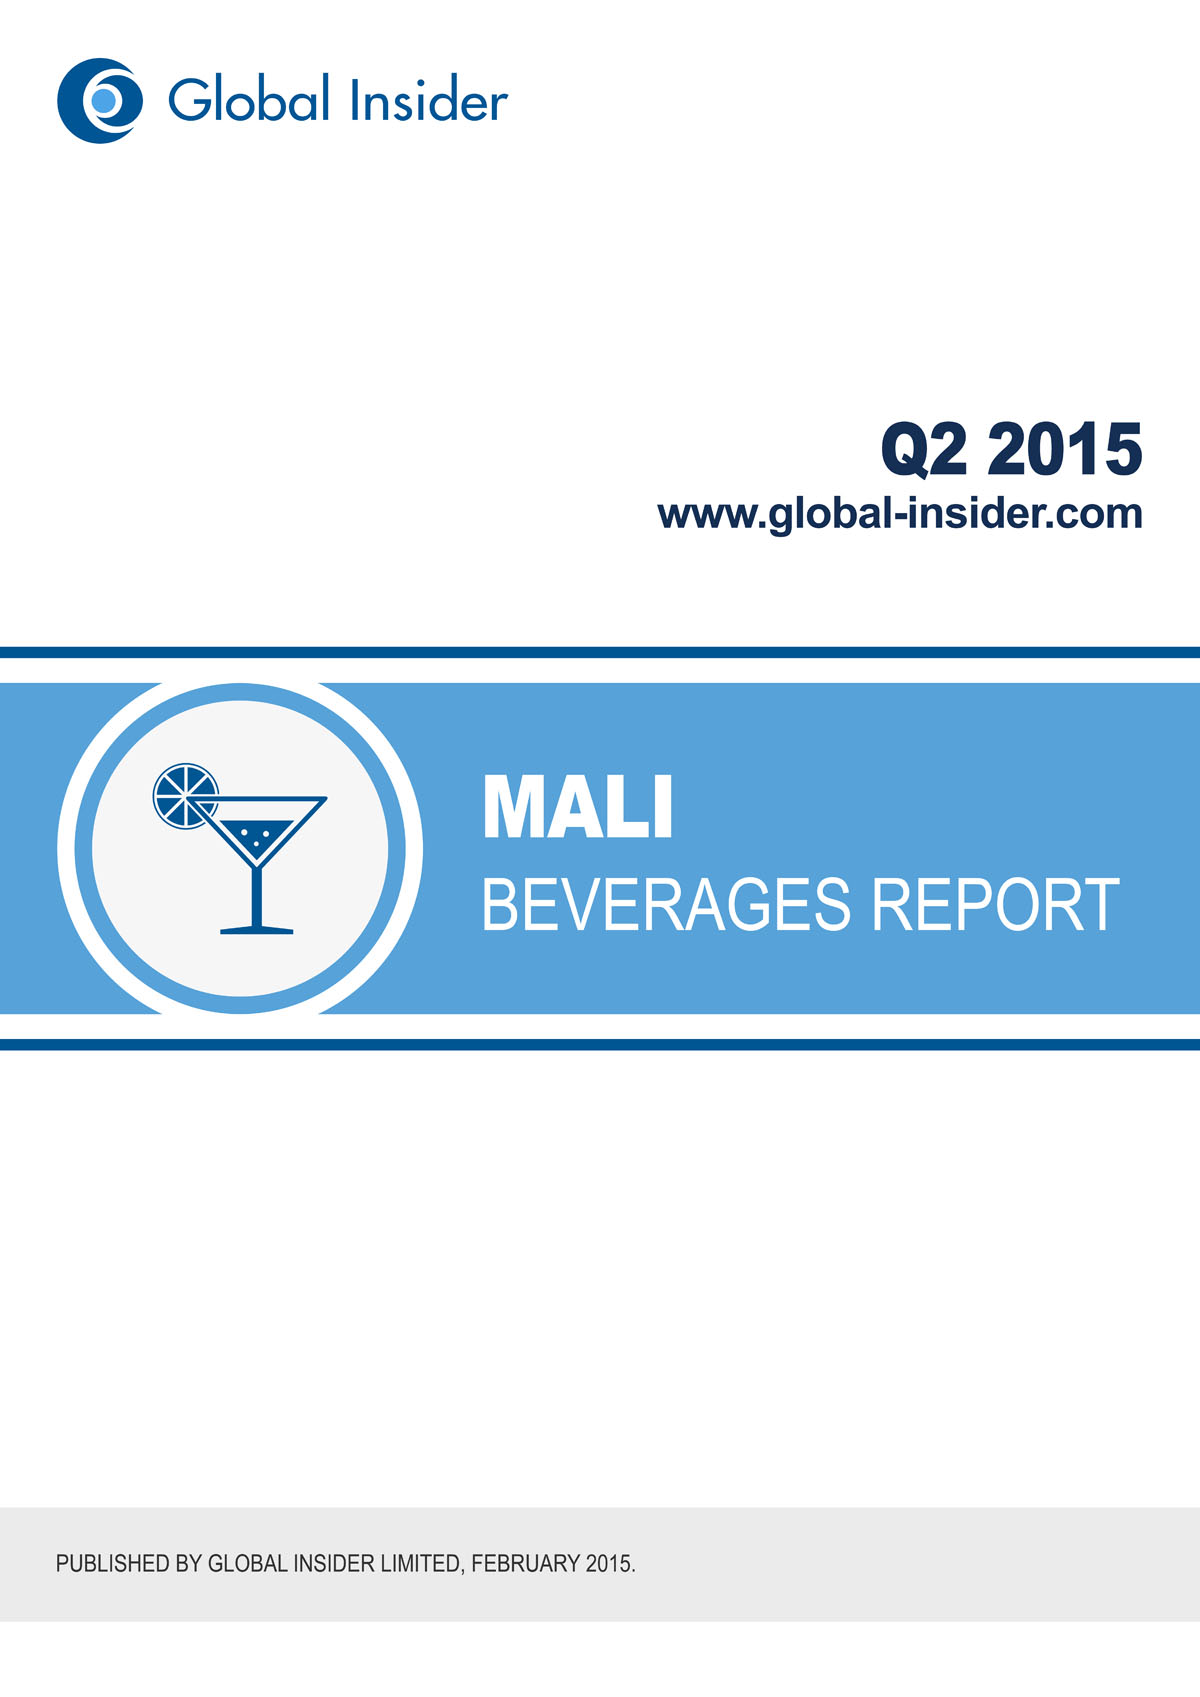 Mali Beverages Report